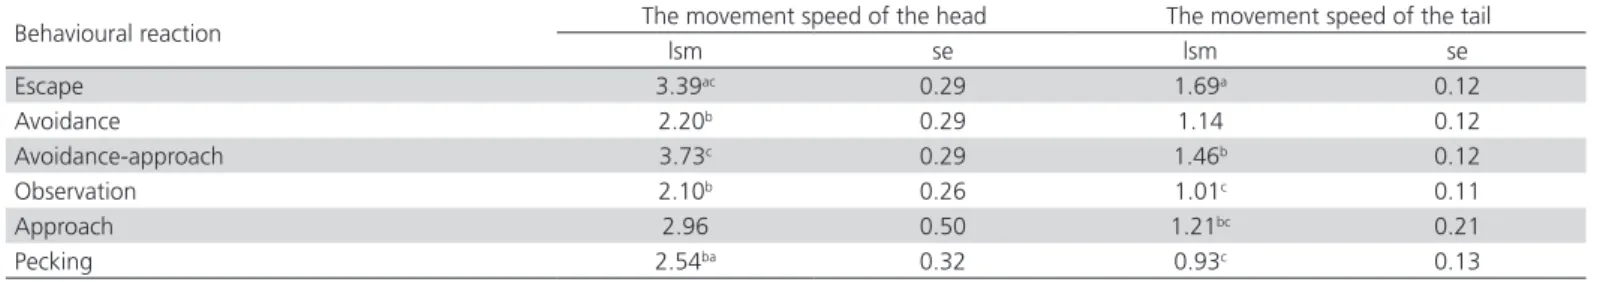 Table 2 – The movement speed of hen’s body in regard to behavioural reactions of birds